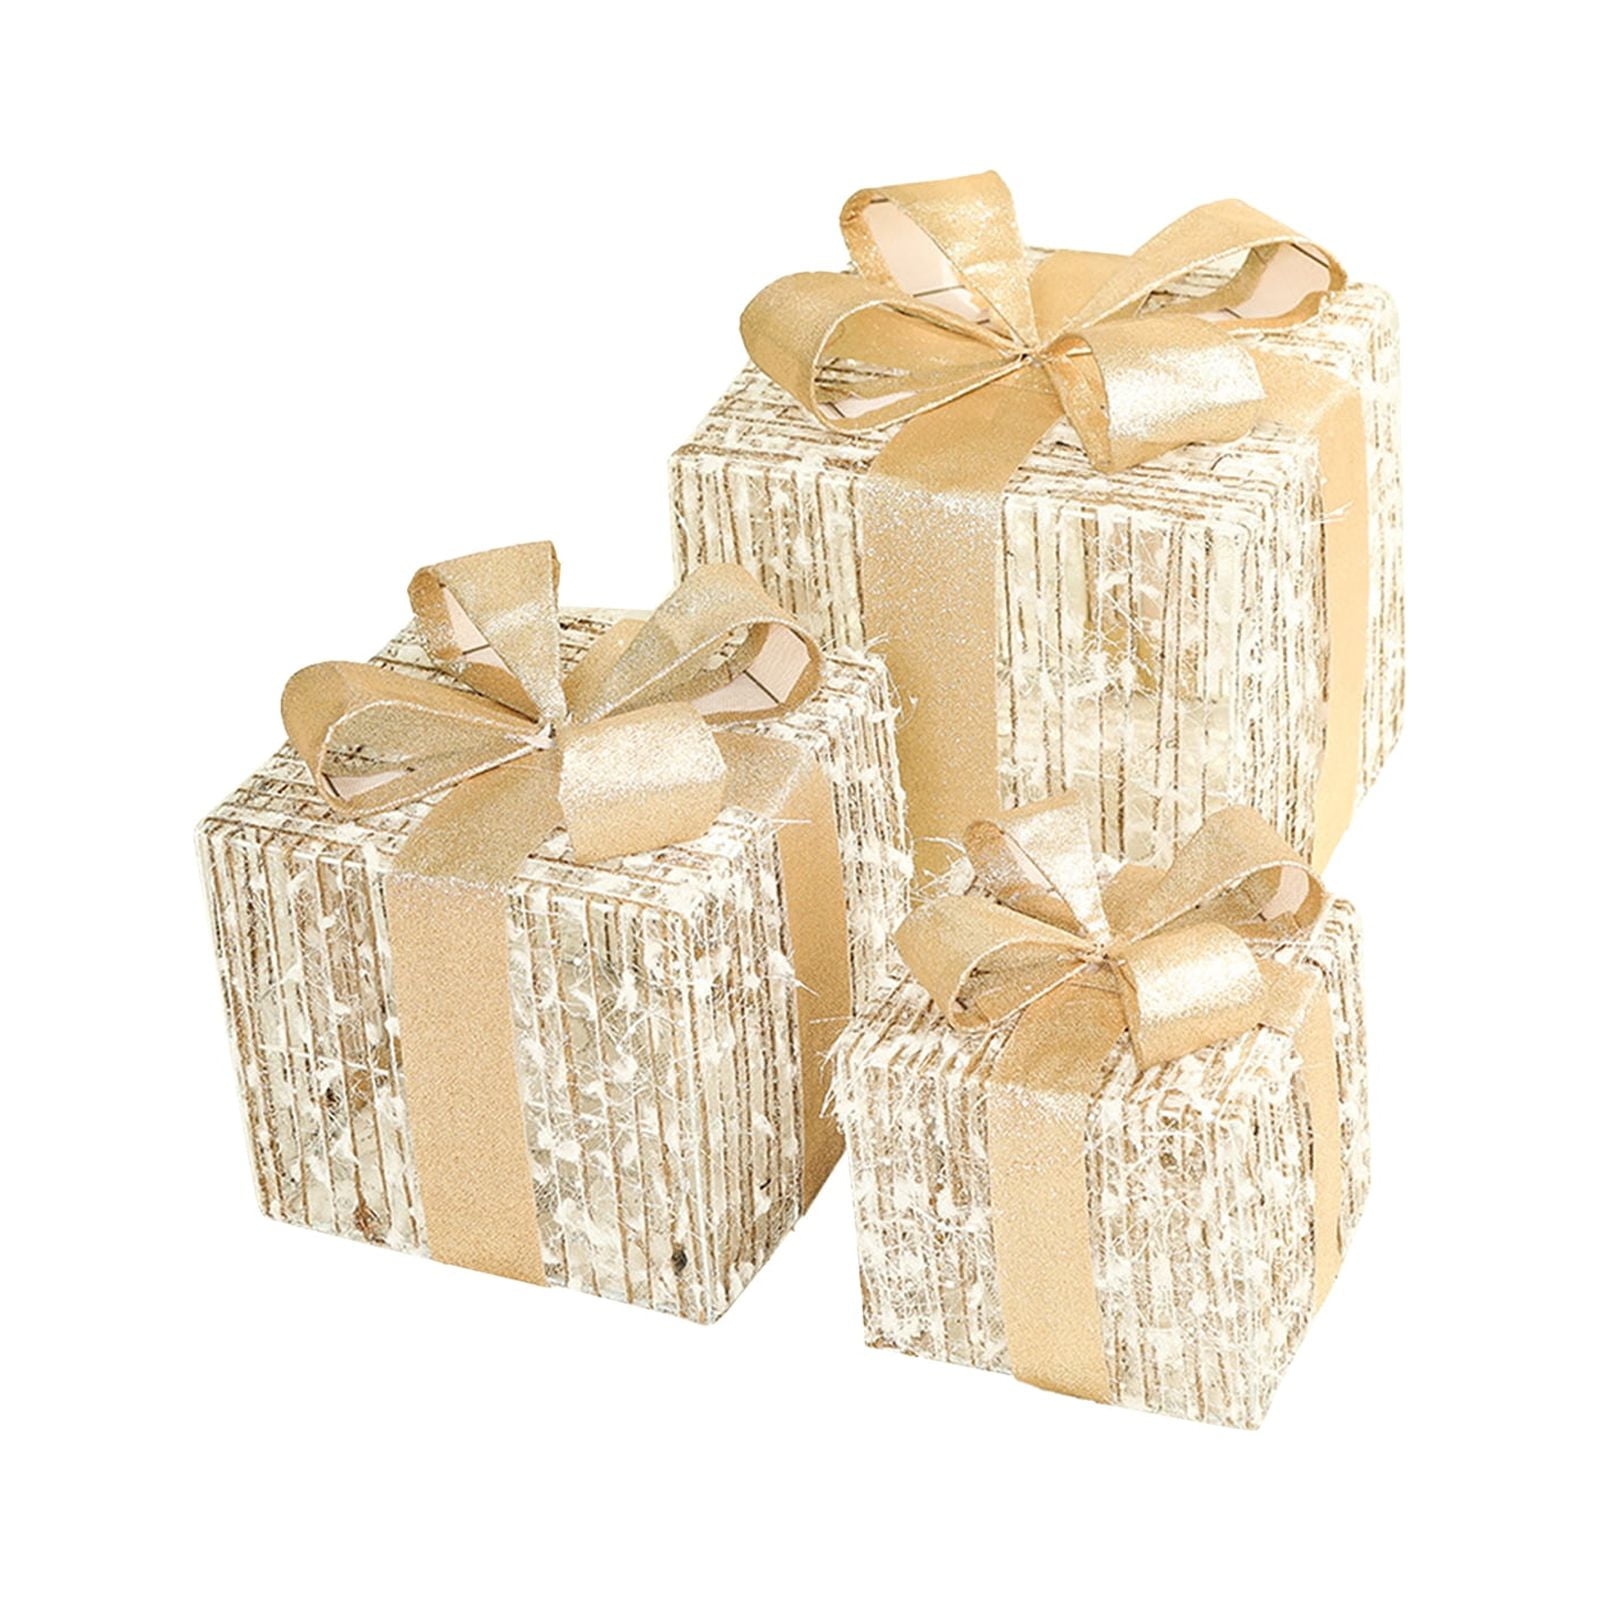  Tondiamo 24 Pcs Jewelry Gift Boxes 3.5 x 3.5 x 1.3